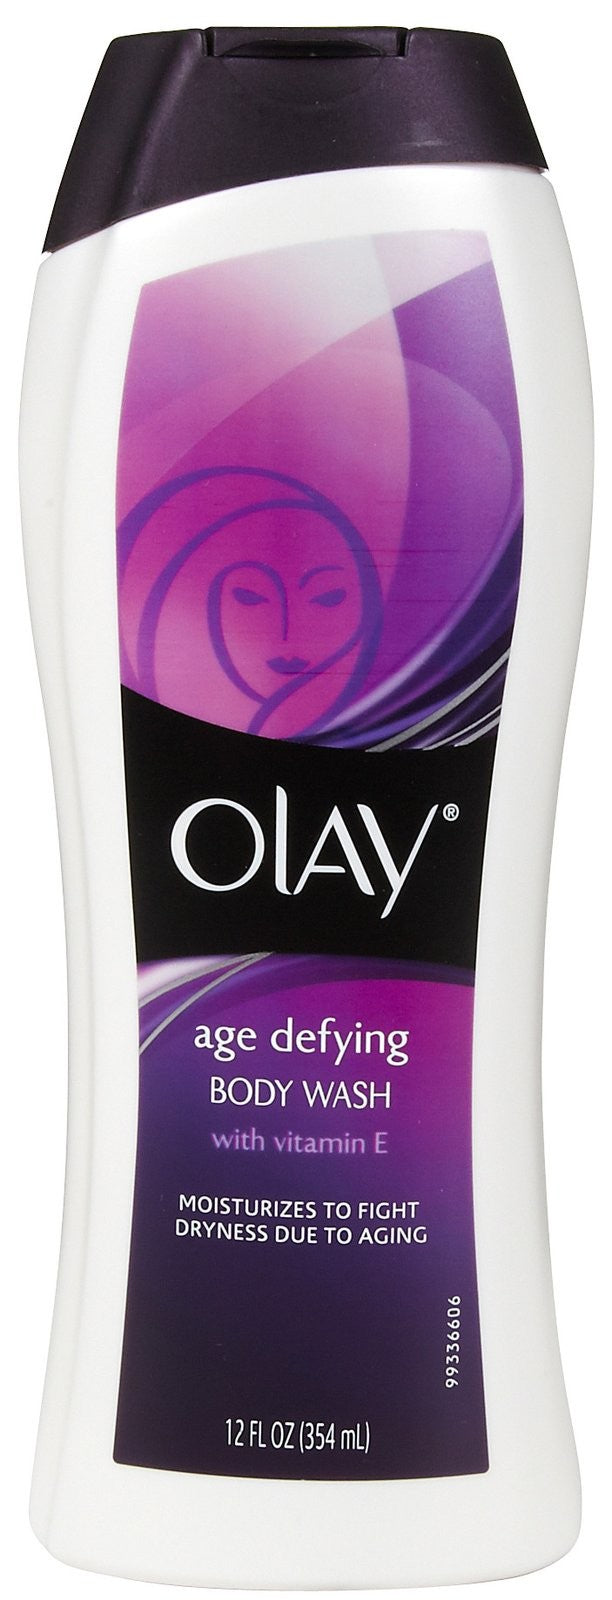 Olay Age Defying Body Wash with Vitamin E 354ml